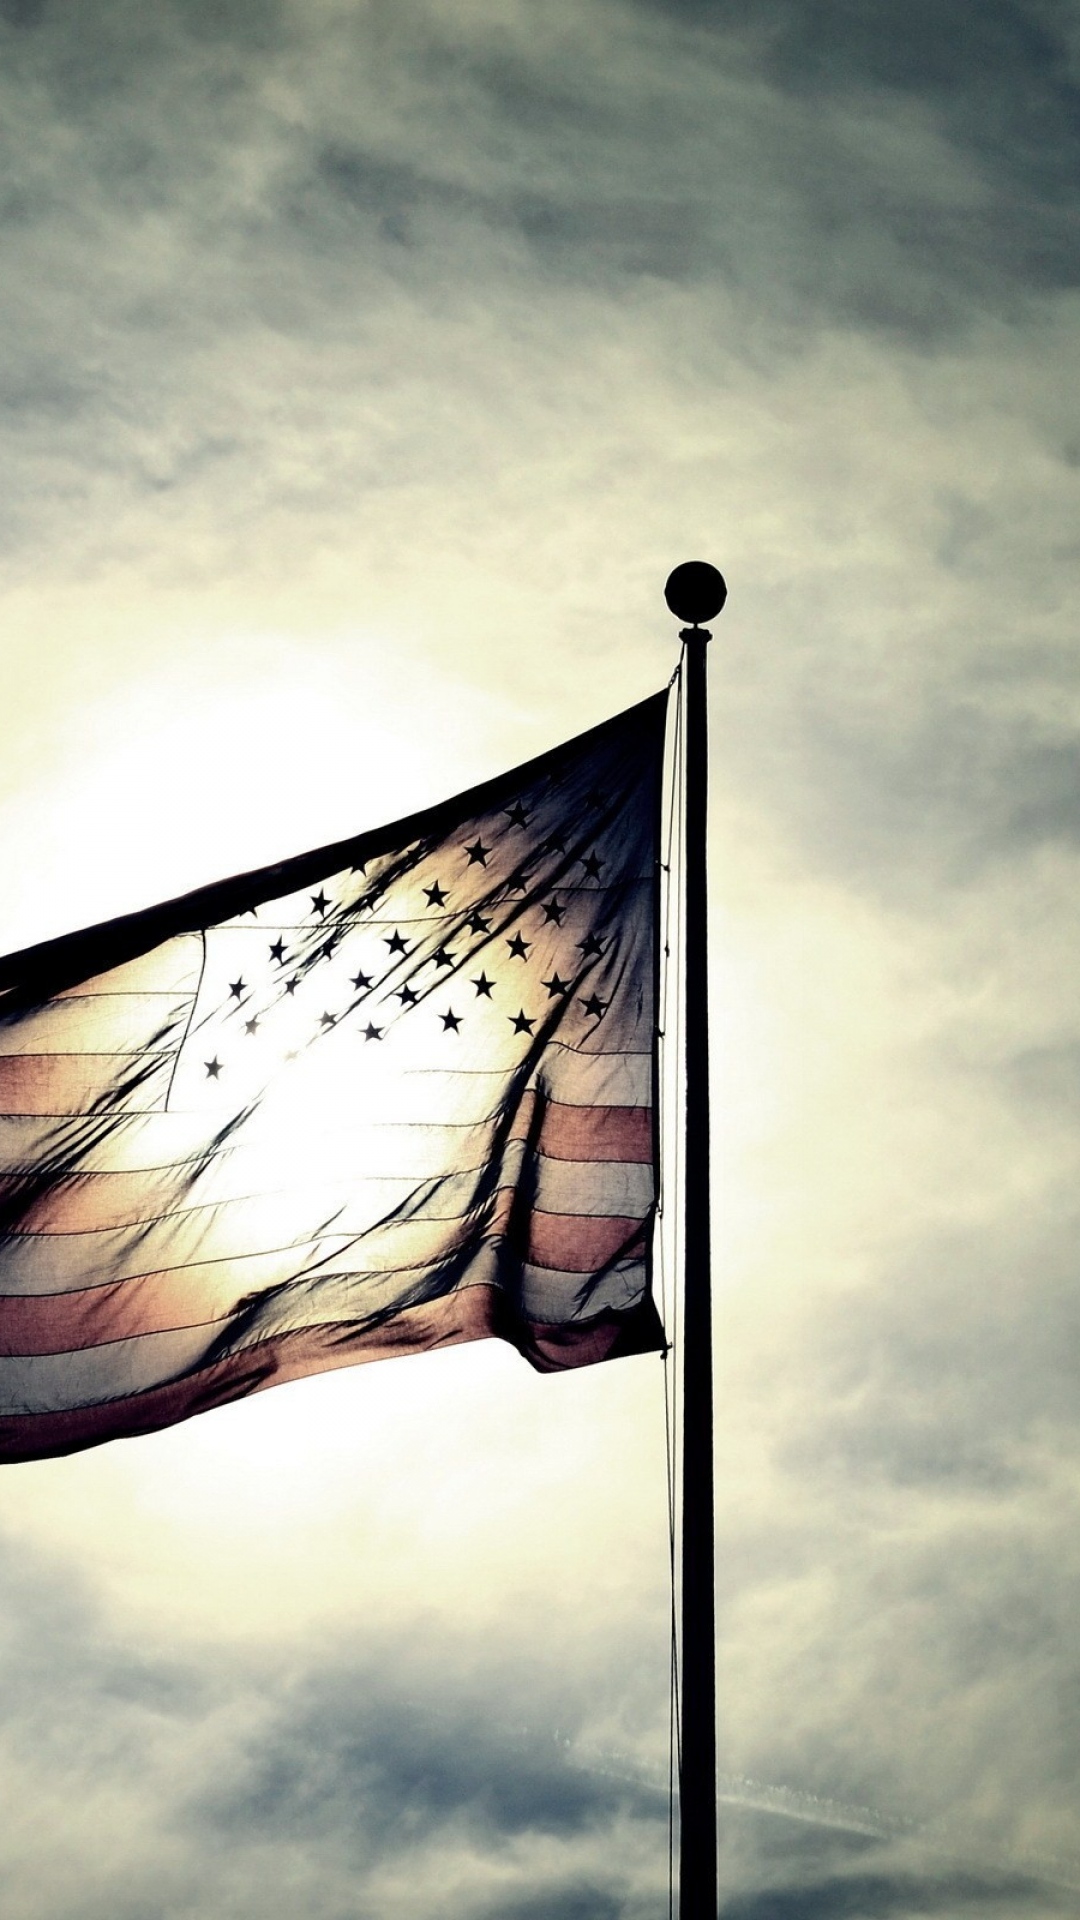 American Patriotic IPhone 5 wallpaper by PheksyBloo on DeviantArt